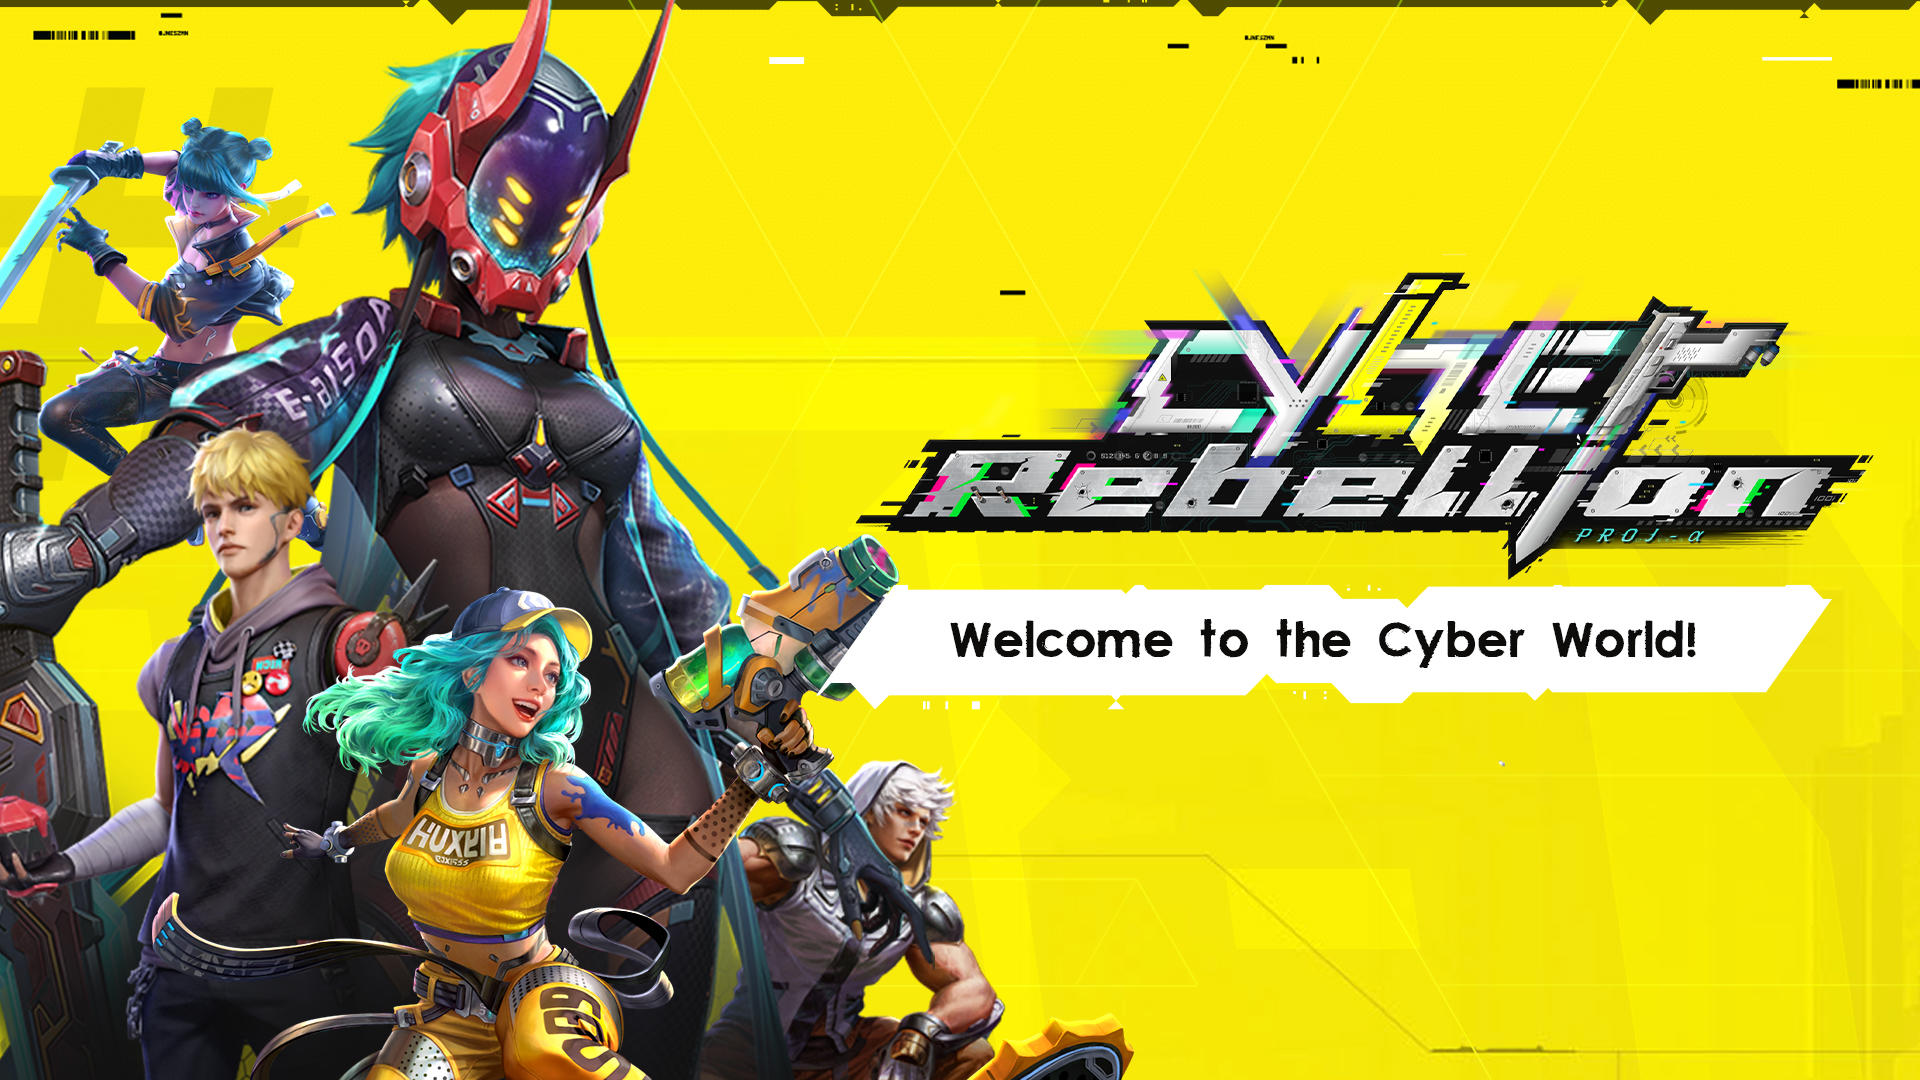 Screenshot 1 of Cyber Rebellion 1.1.5